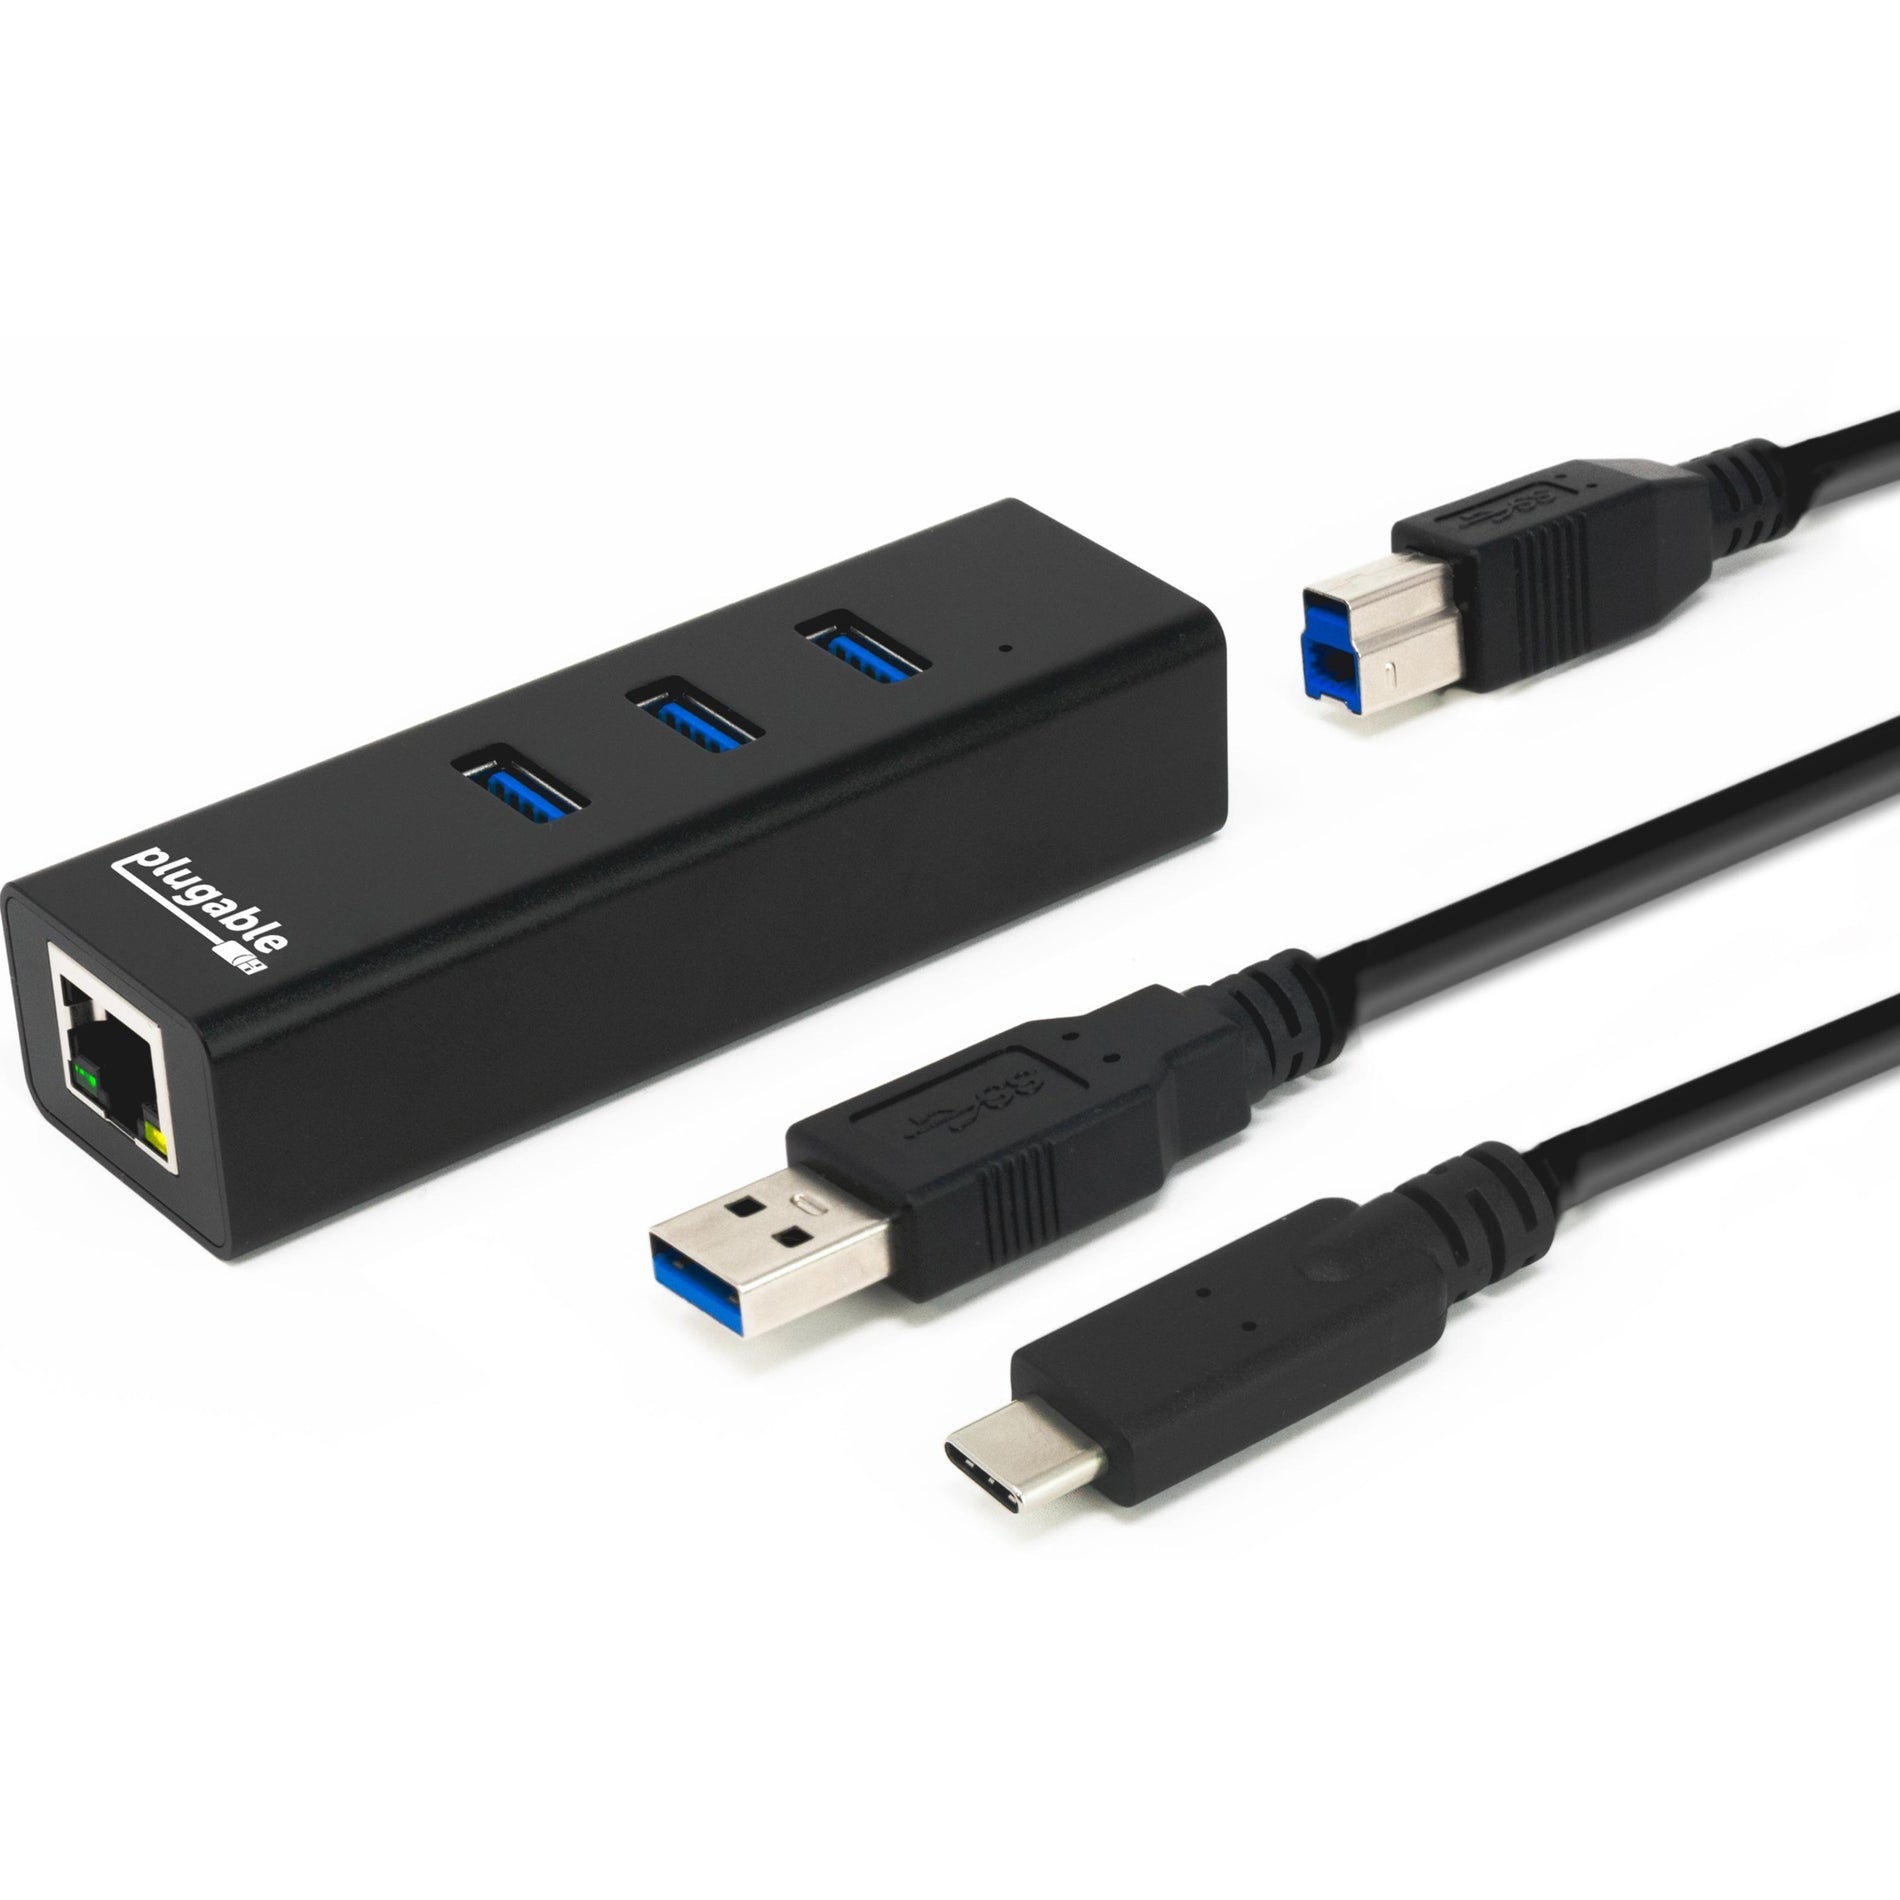 Marca: Plugable Adaptador de ETHERNET GIGABIT USB3-HUB3ME USB 3.0 Concentrador de 3 puertos USB con Ethernet